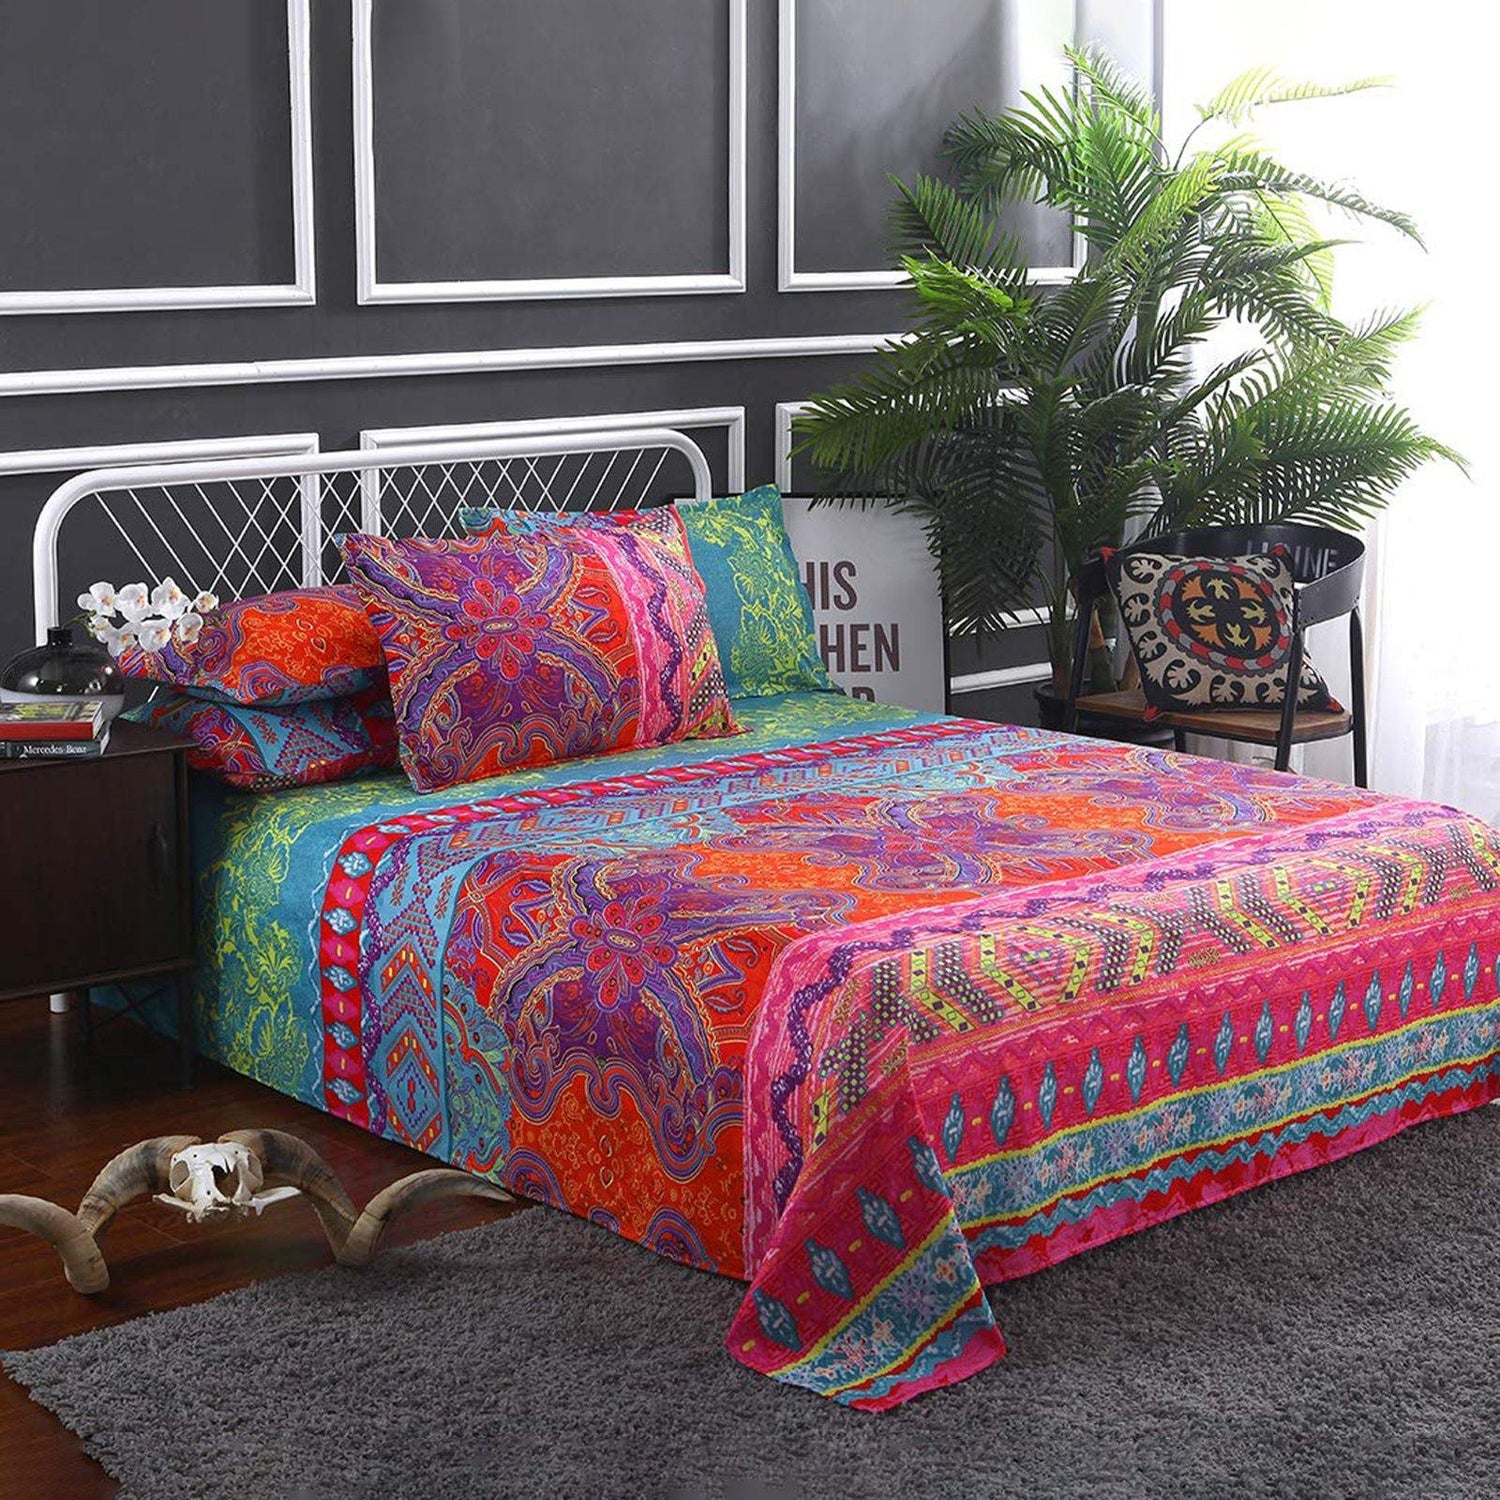 WONGS BEDDING Bohemian Style Sheet Set - Wongs bedding